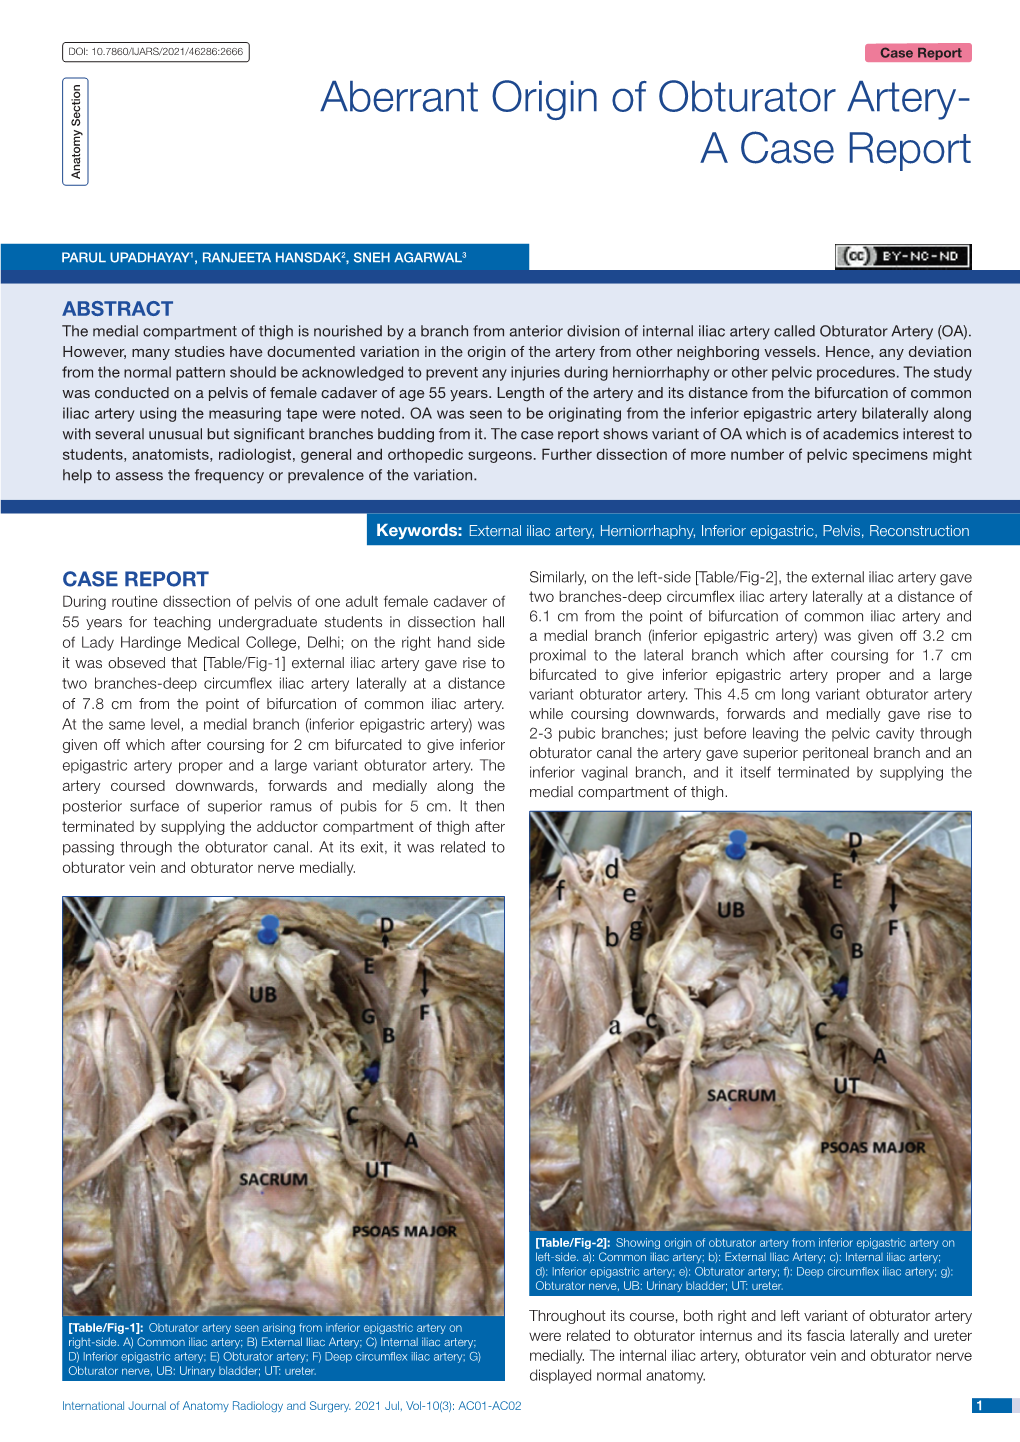 Aberrant Origin of Obturator Artery- a Case Report Anatomy Section